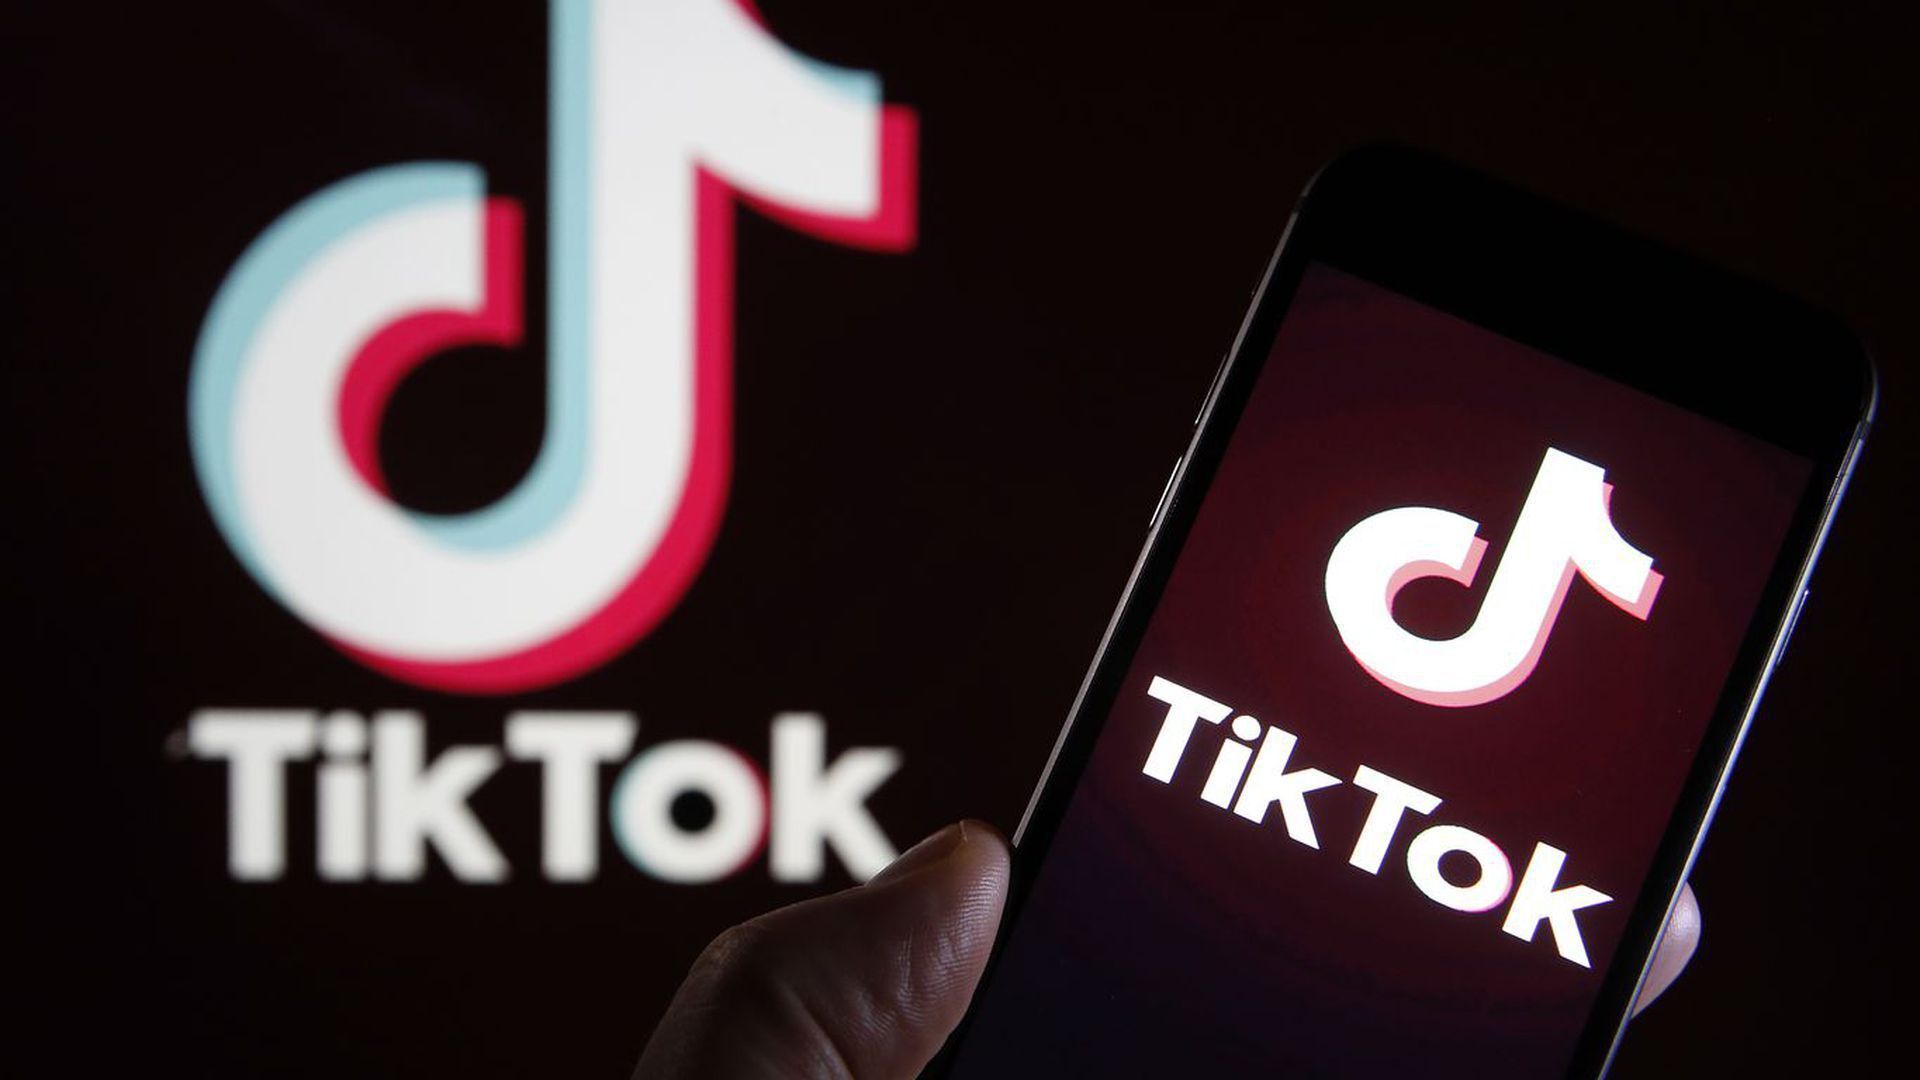 Image of the Tiktok logo on a smartphone. 